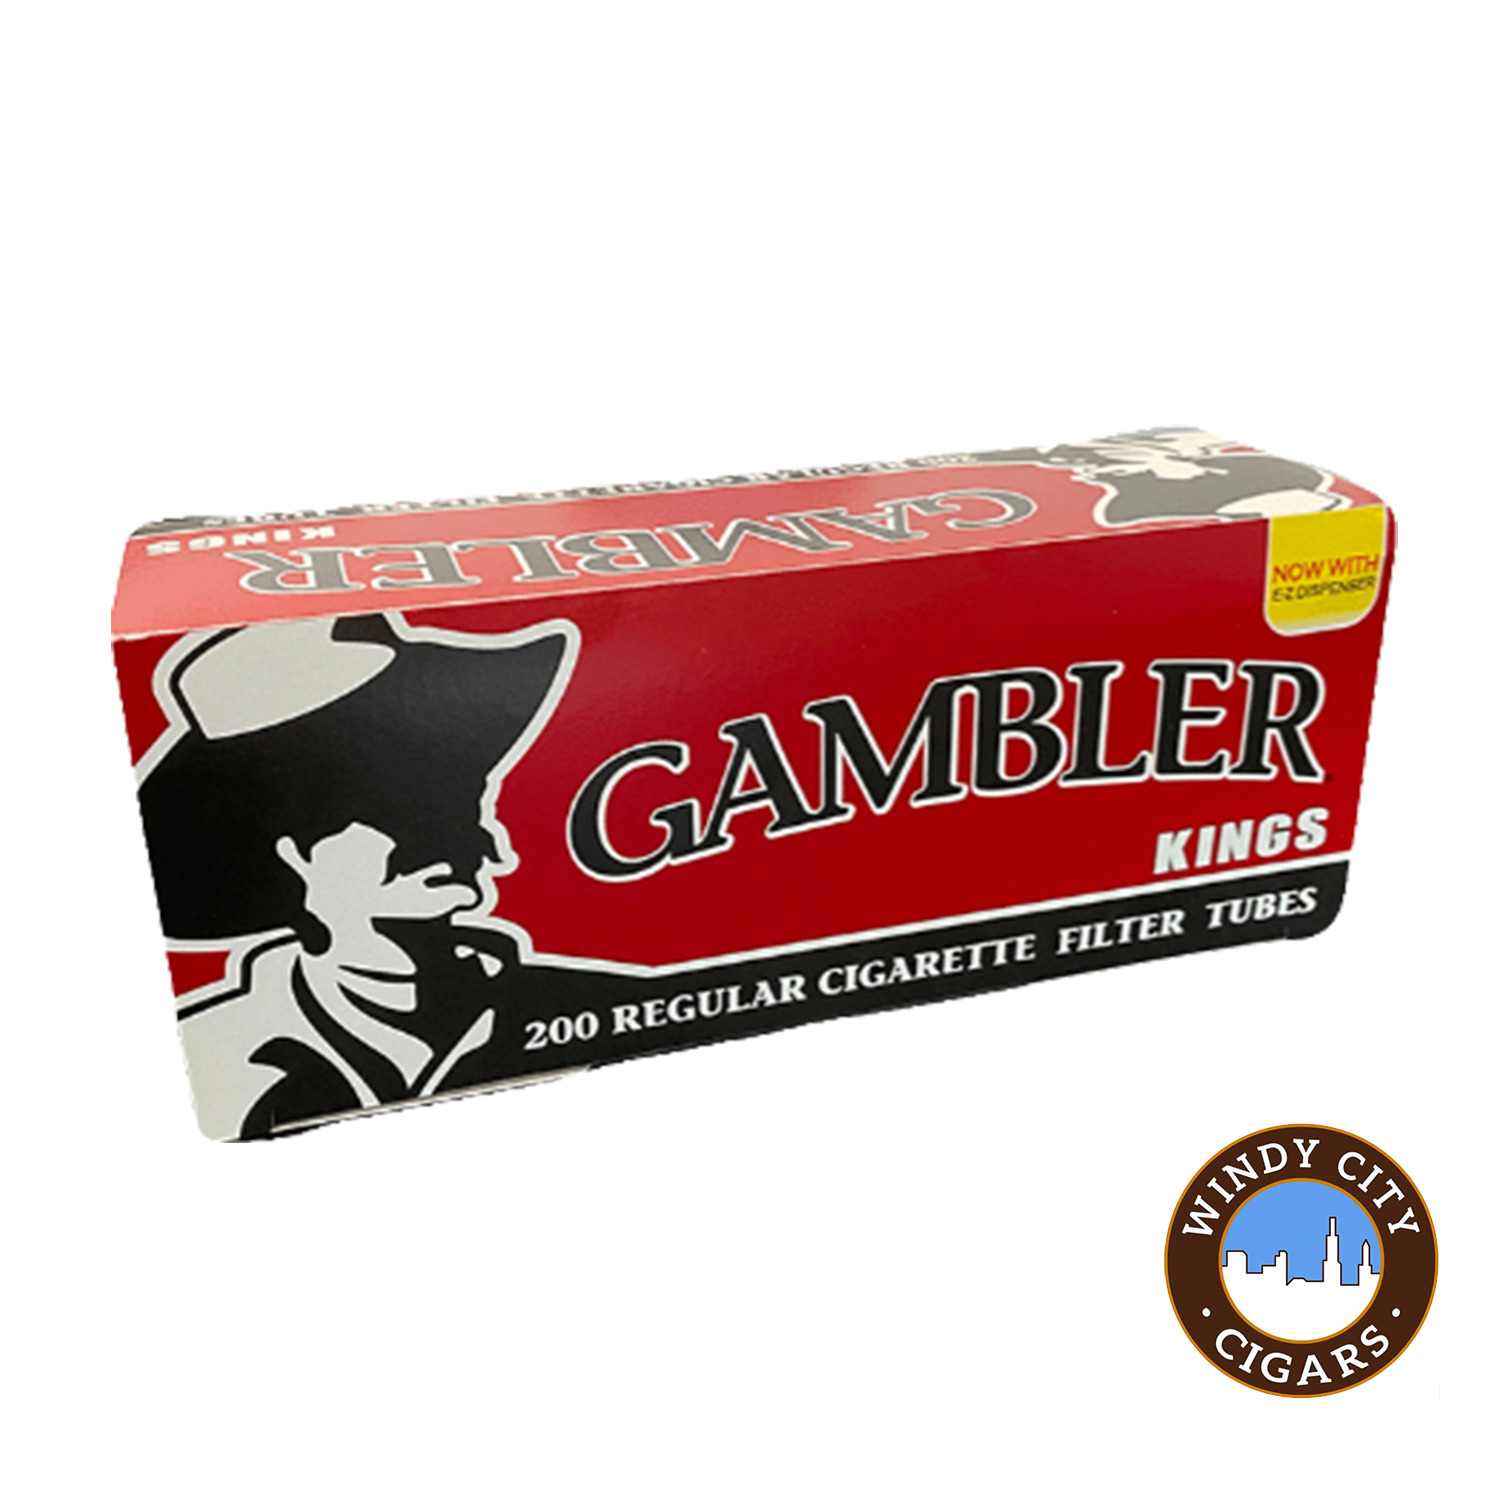 Gambler Red King Cigarette 200ct Tubes - 5 Boxes